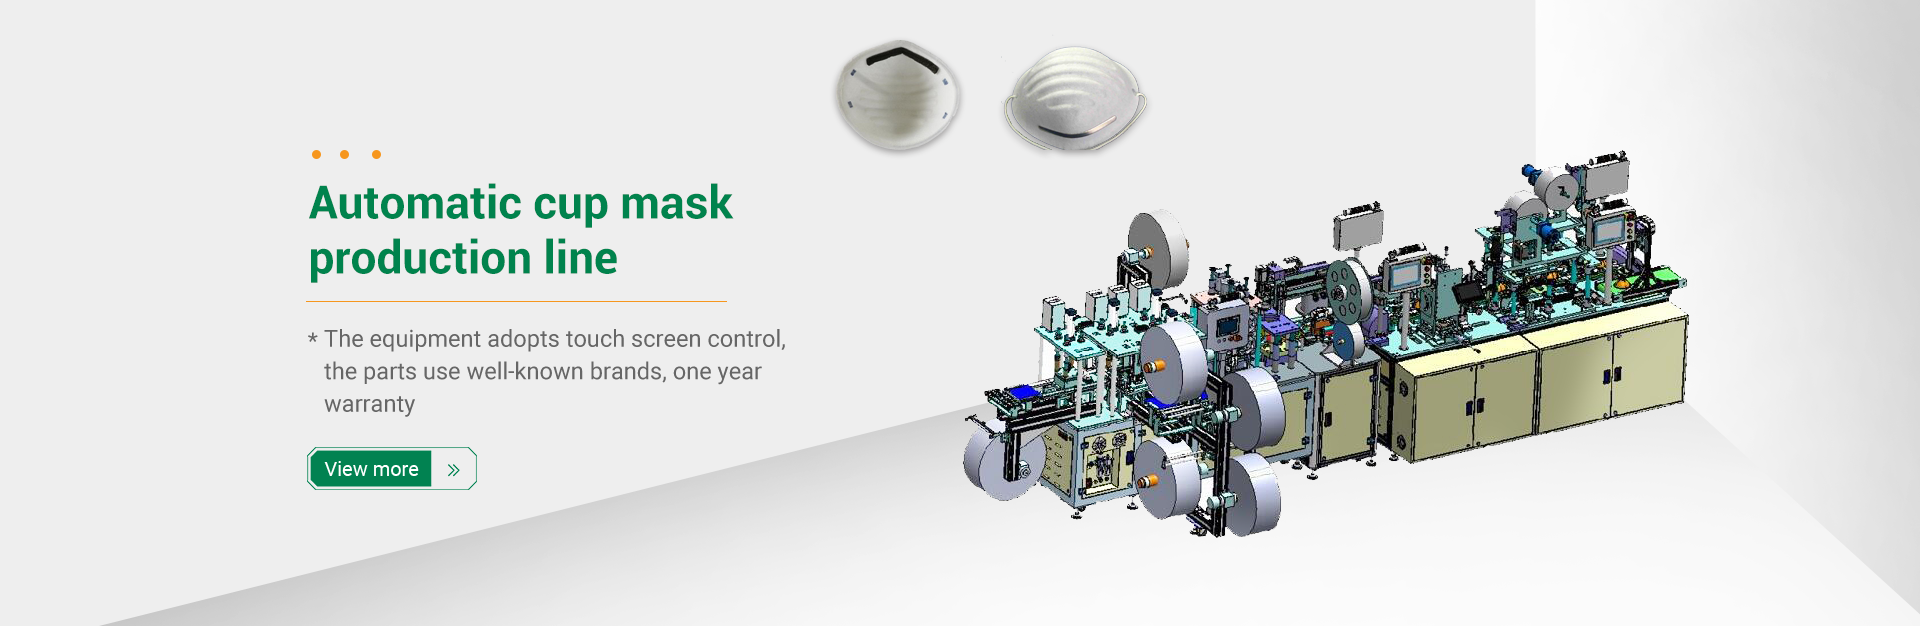 cup mask machine